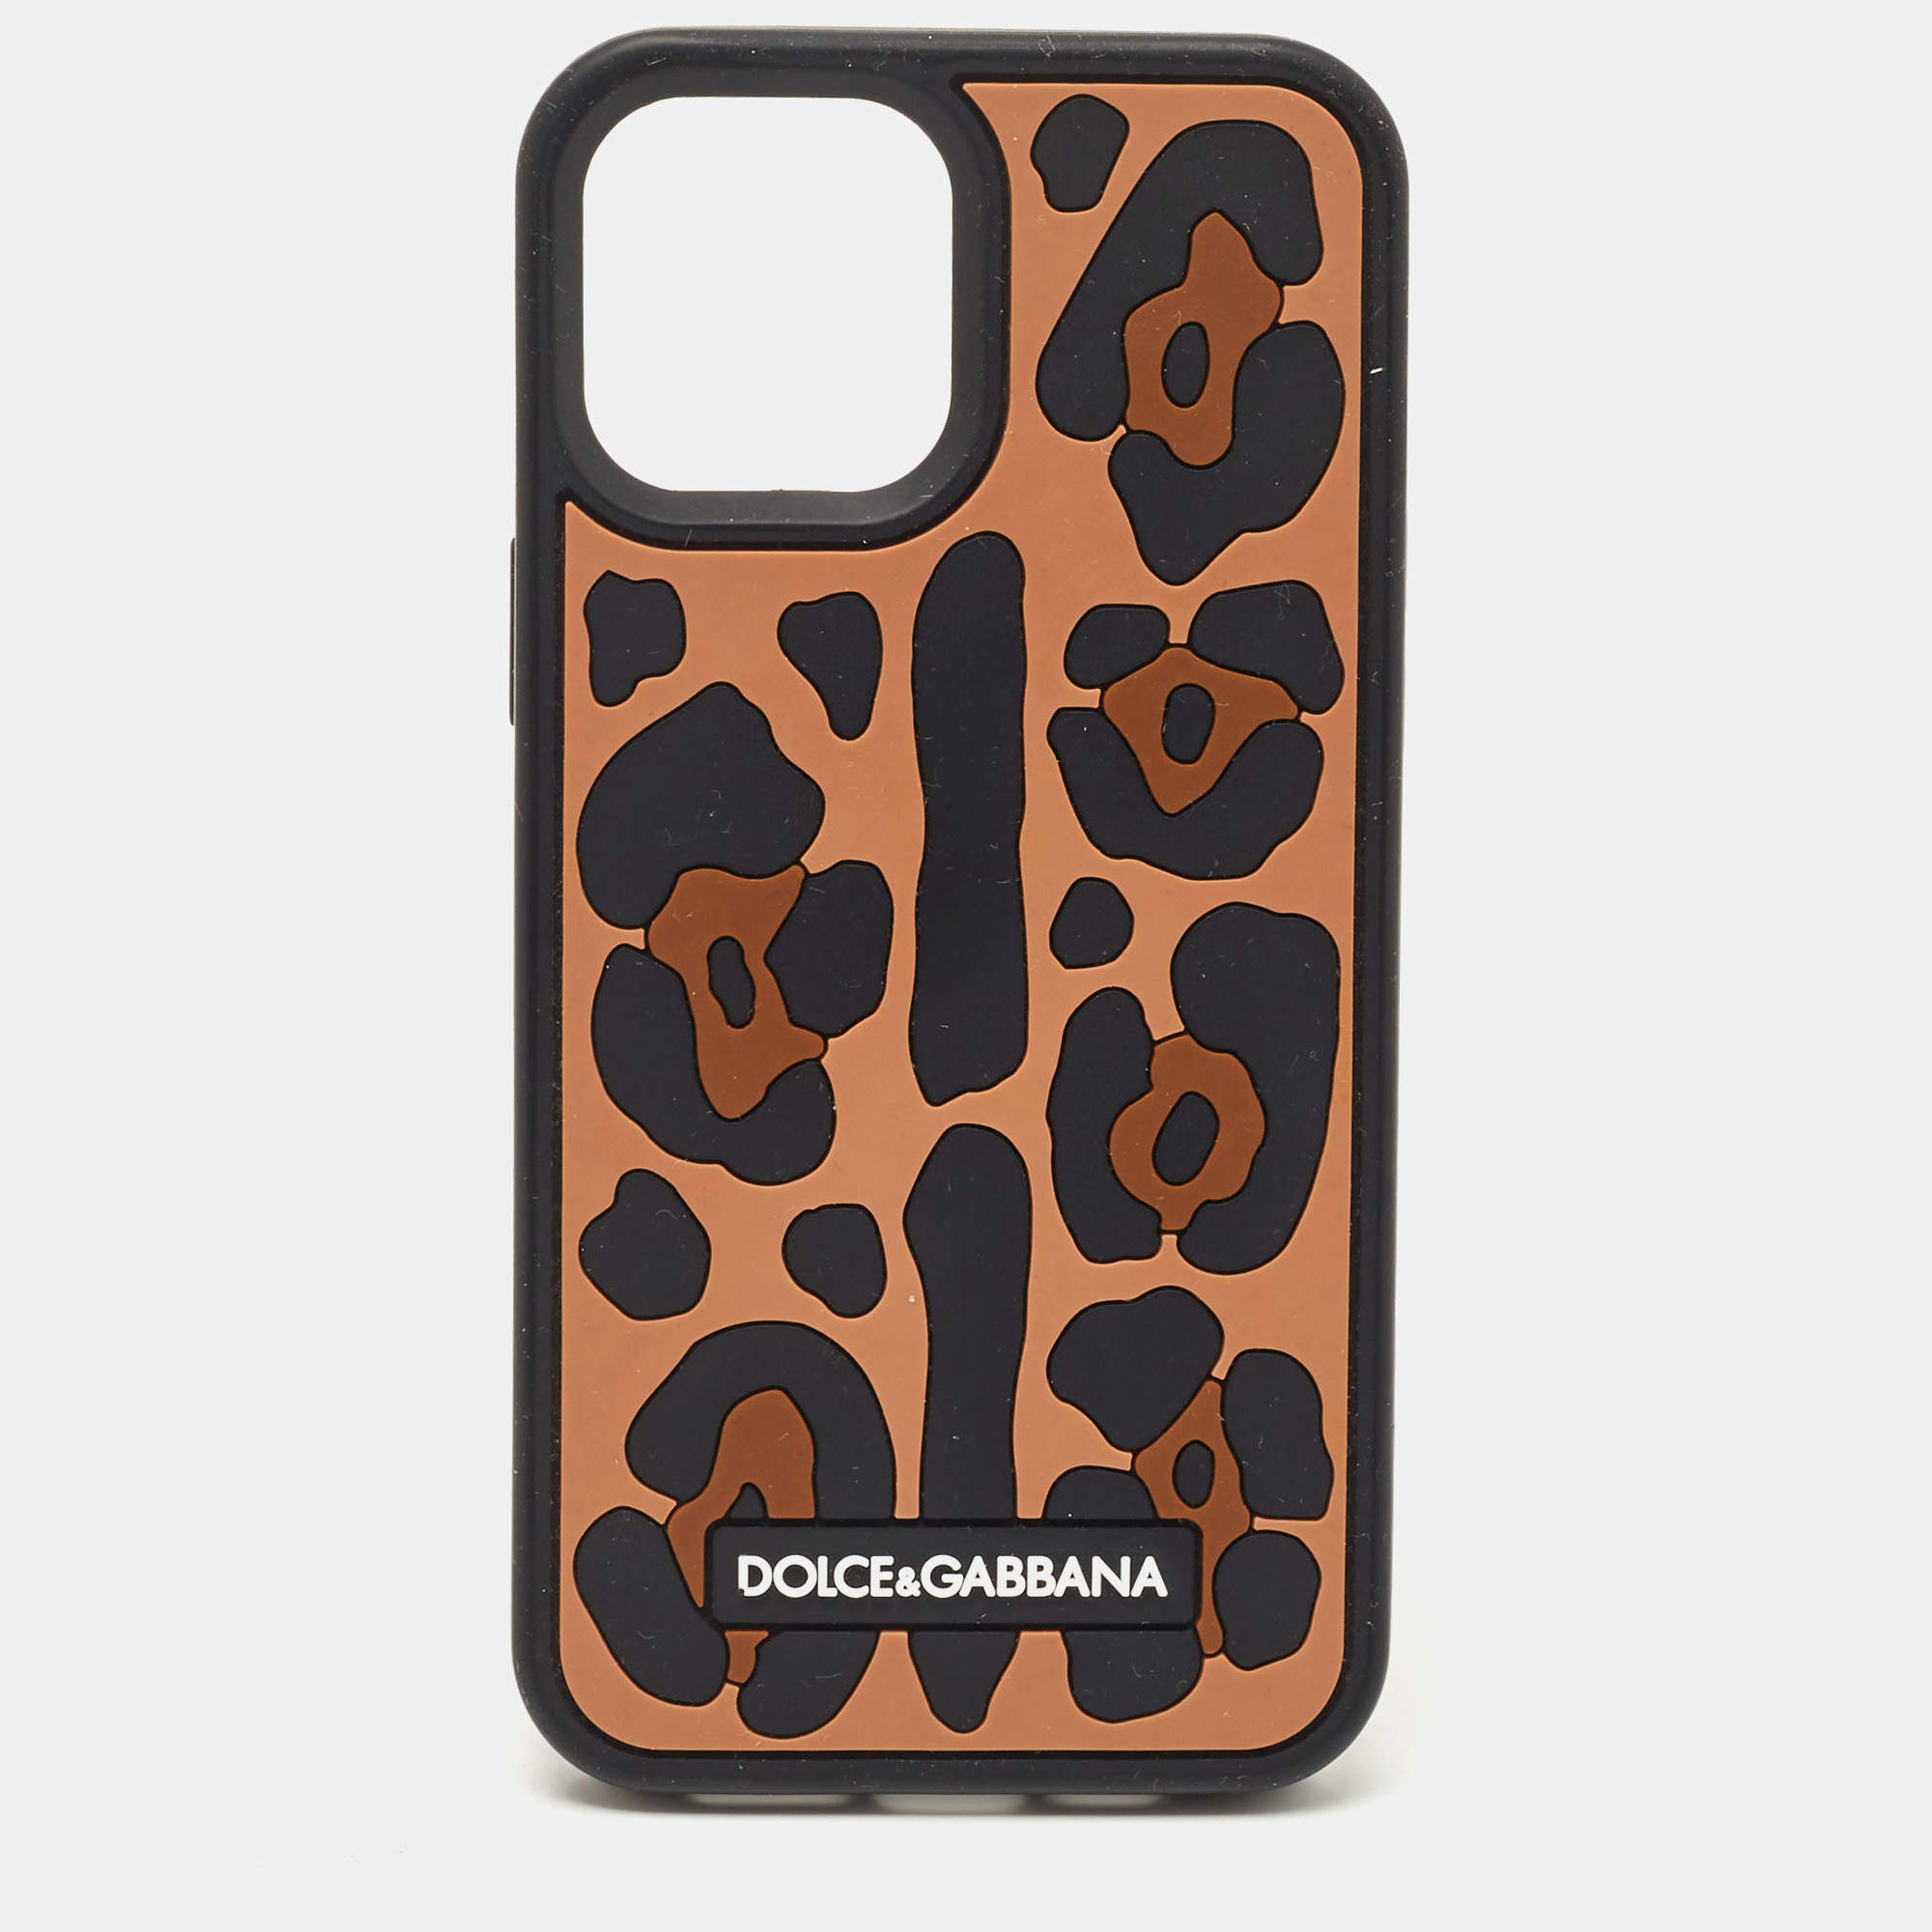 Dolce & Gabbana Brown/Black Leopard Print Rubber iPhone 12 Pro